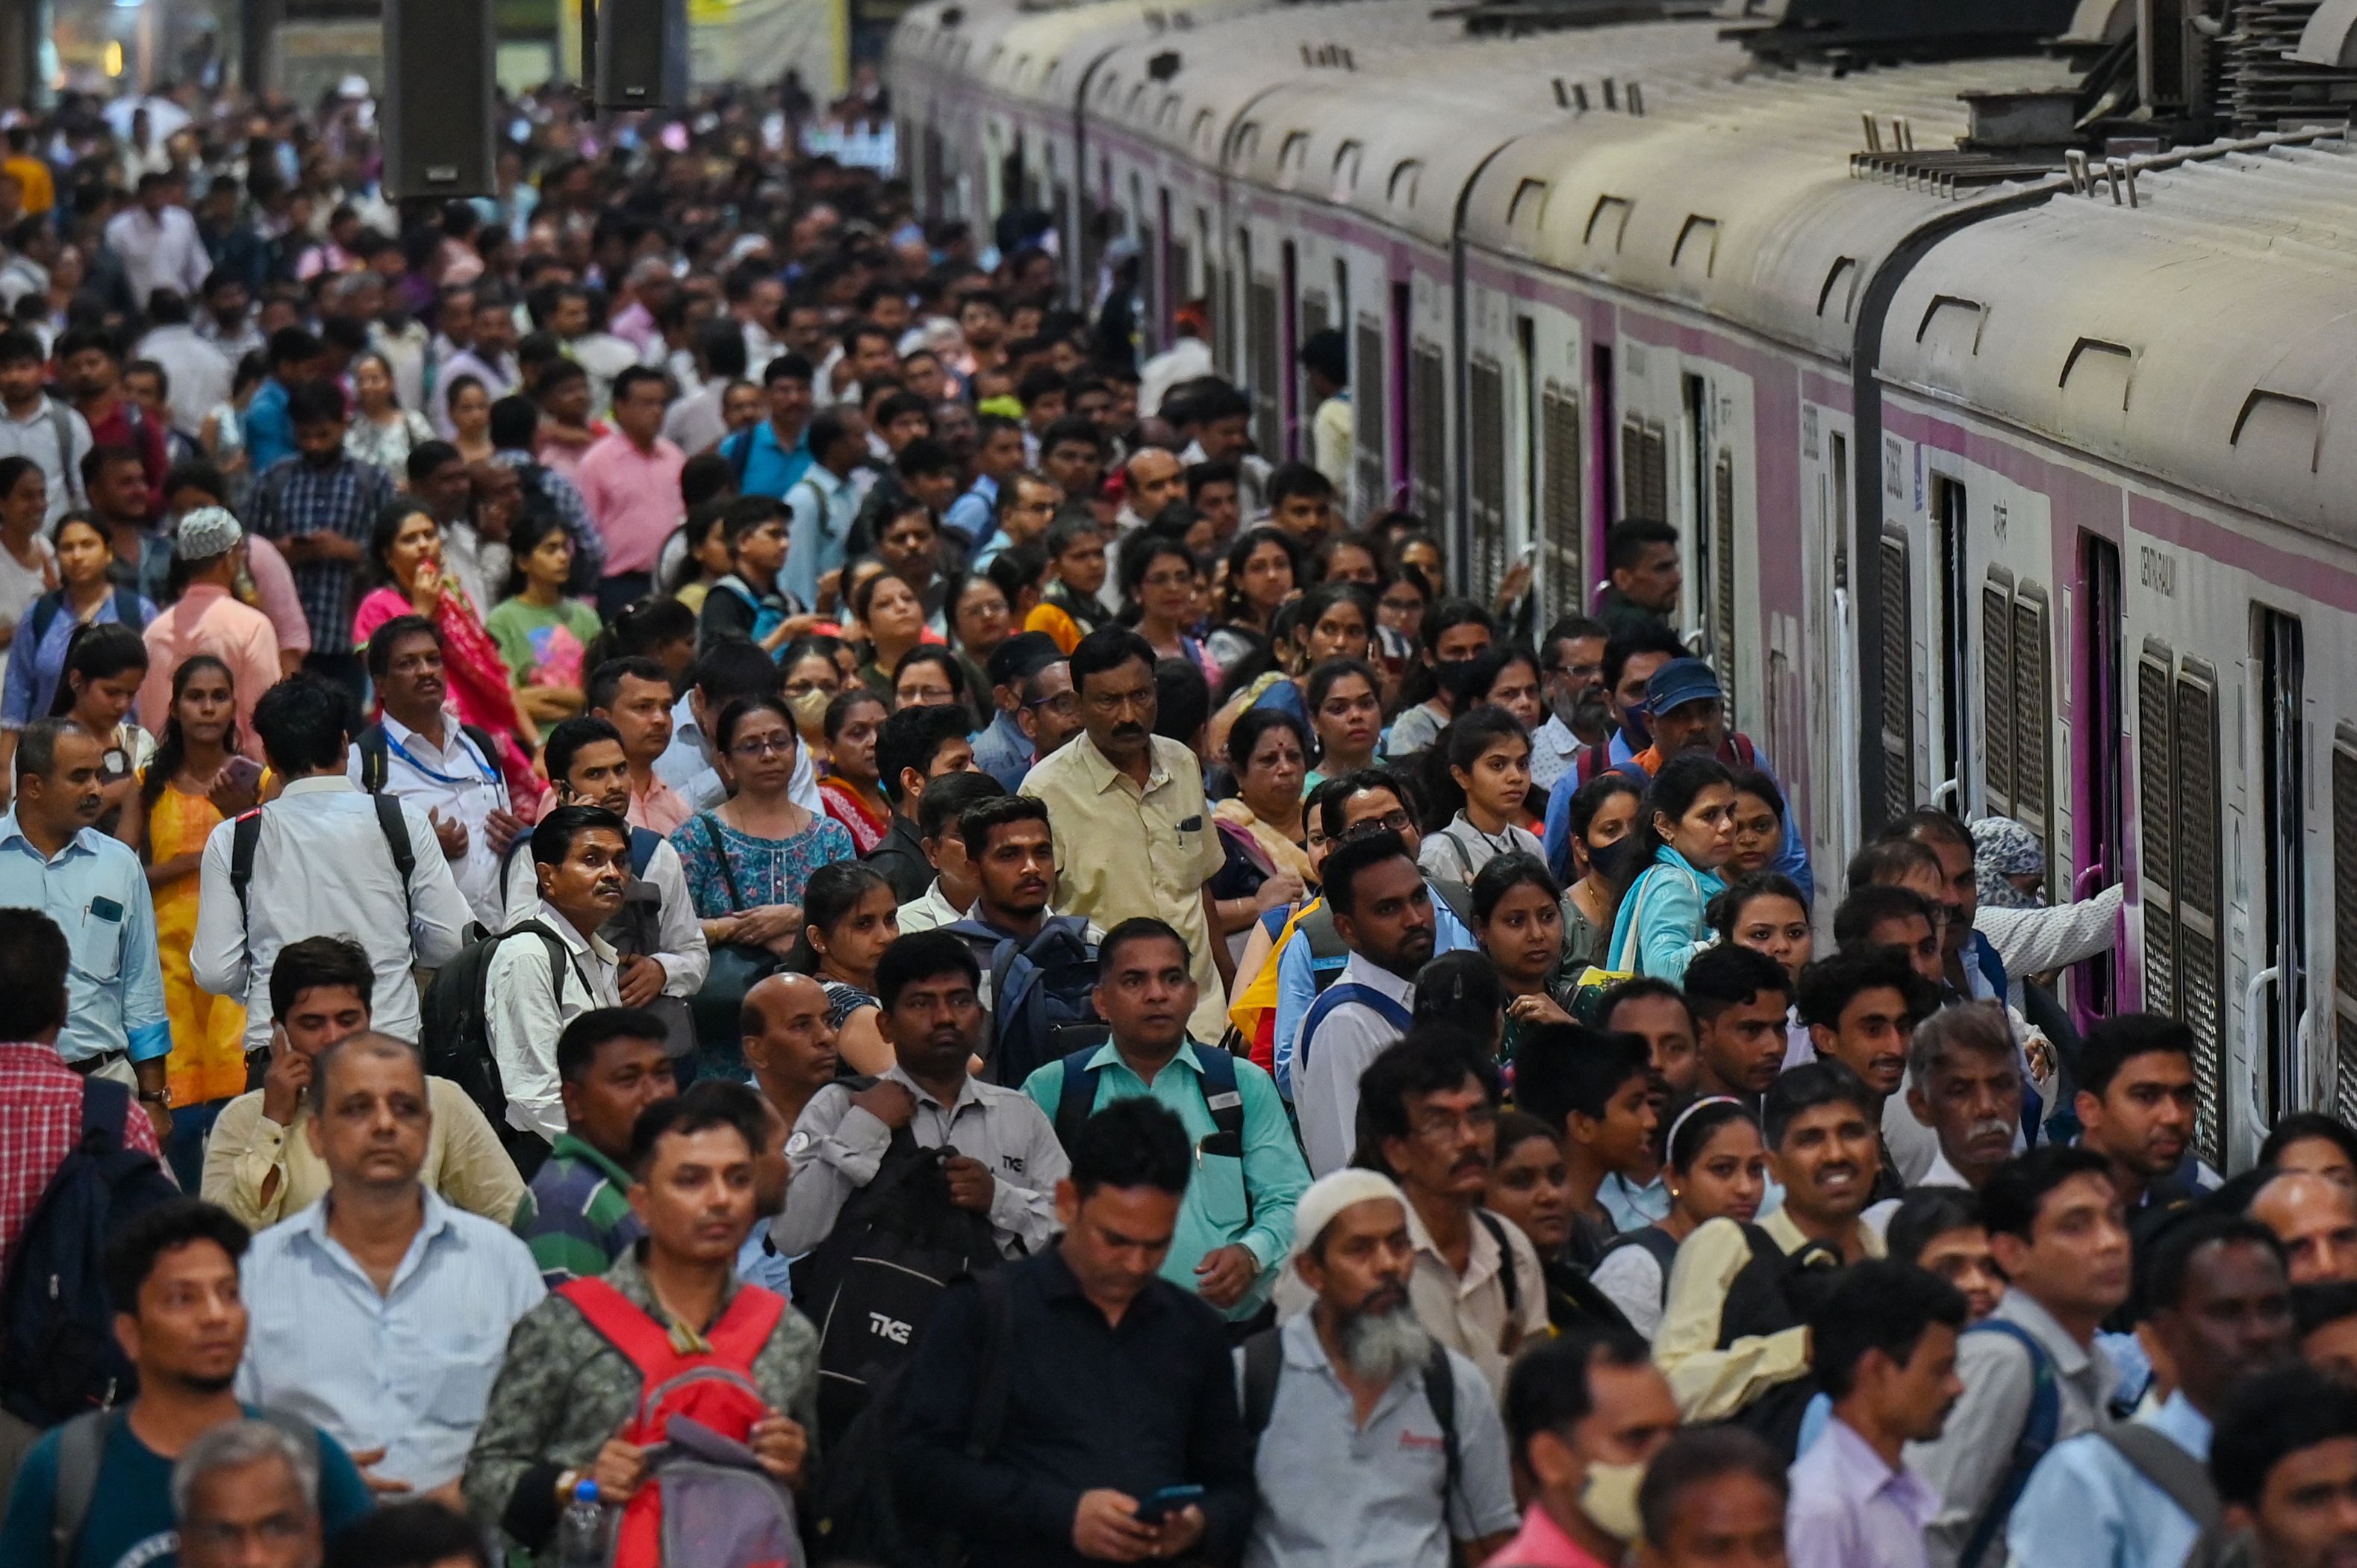 People crowd on platforms at the Chhatrapati Shivaji Terminus railway station in Mumbai